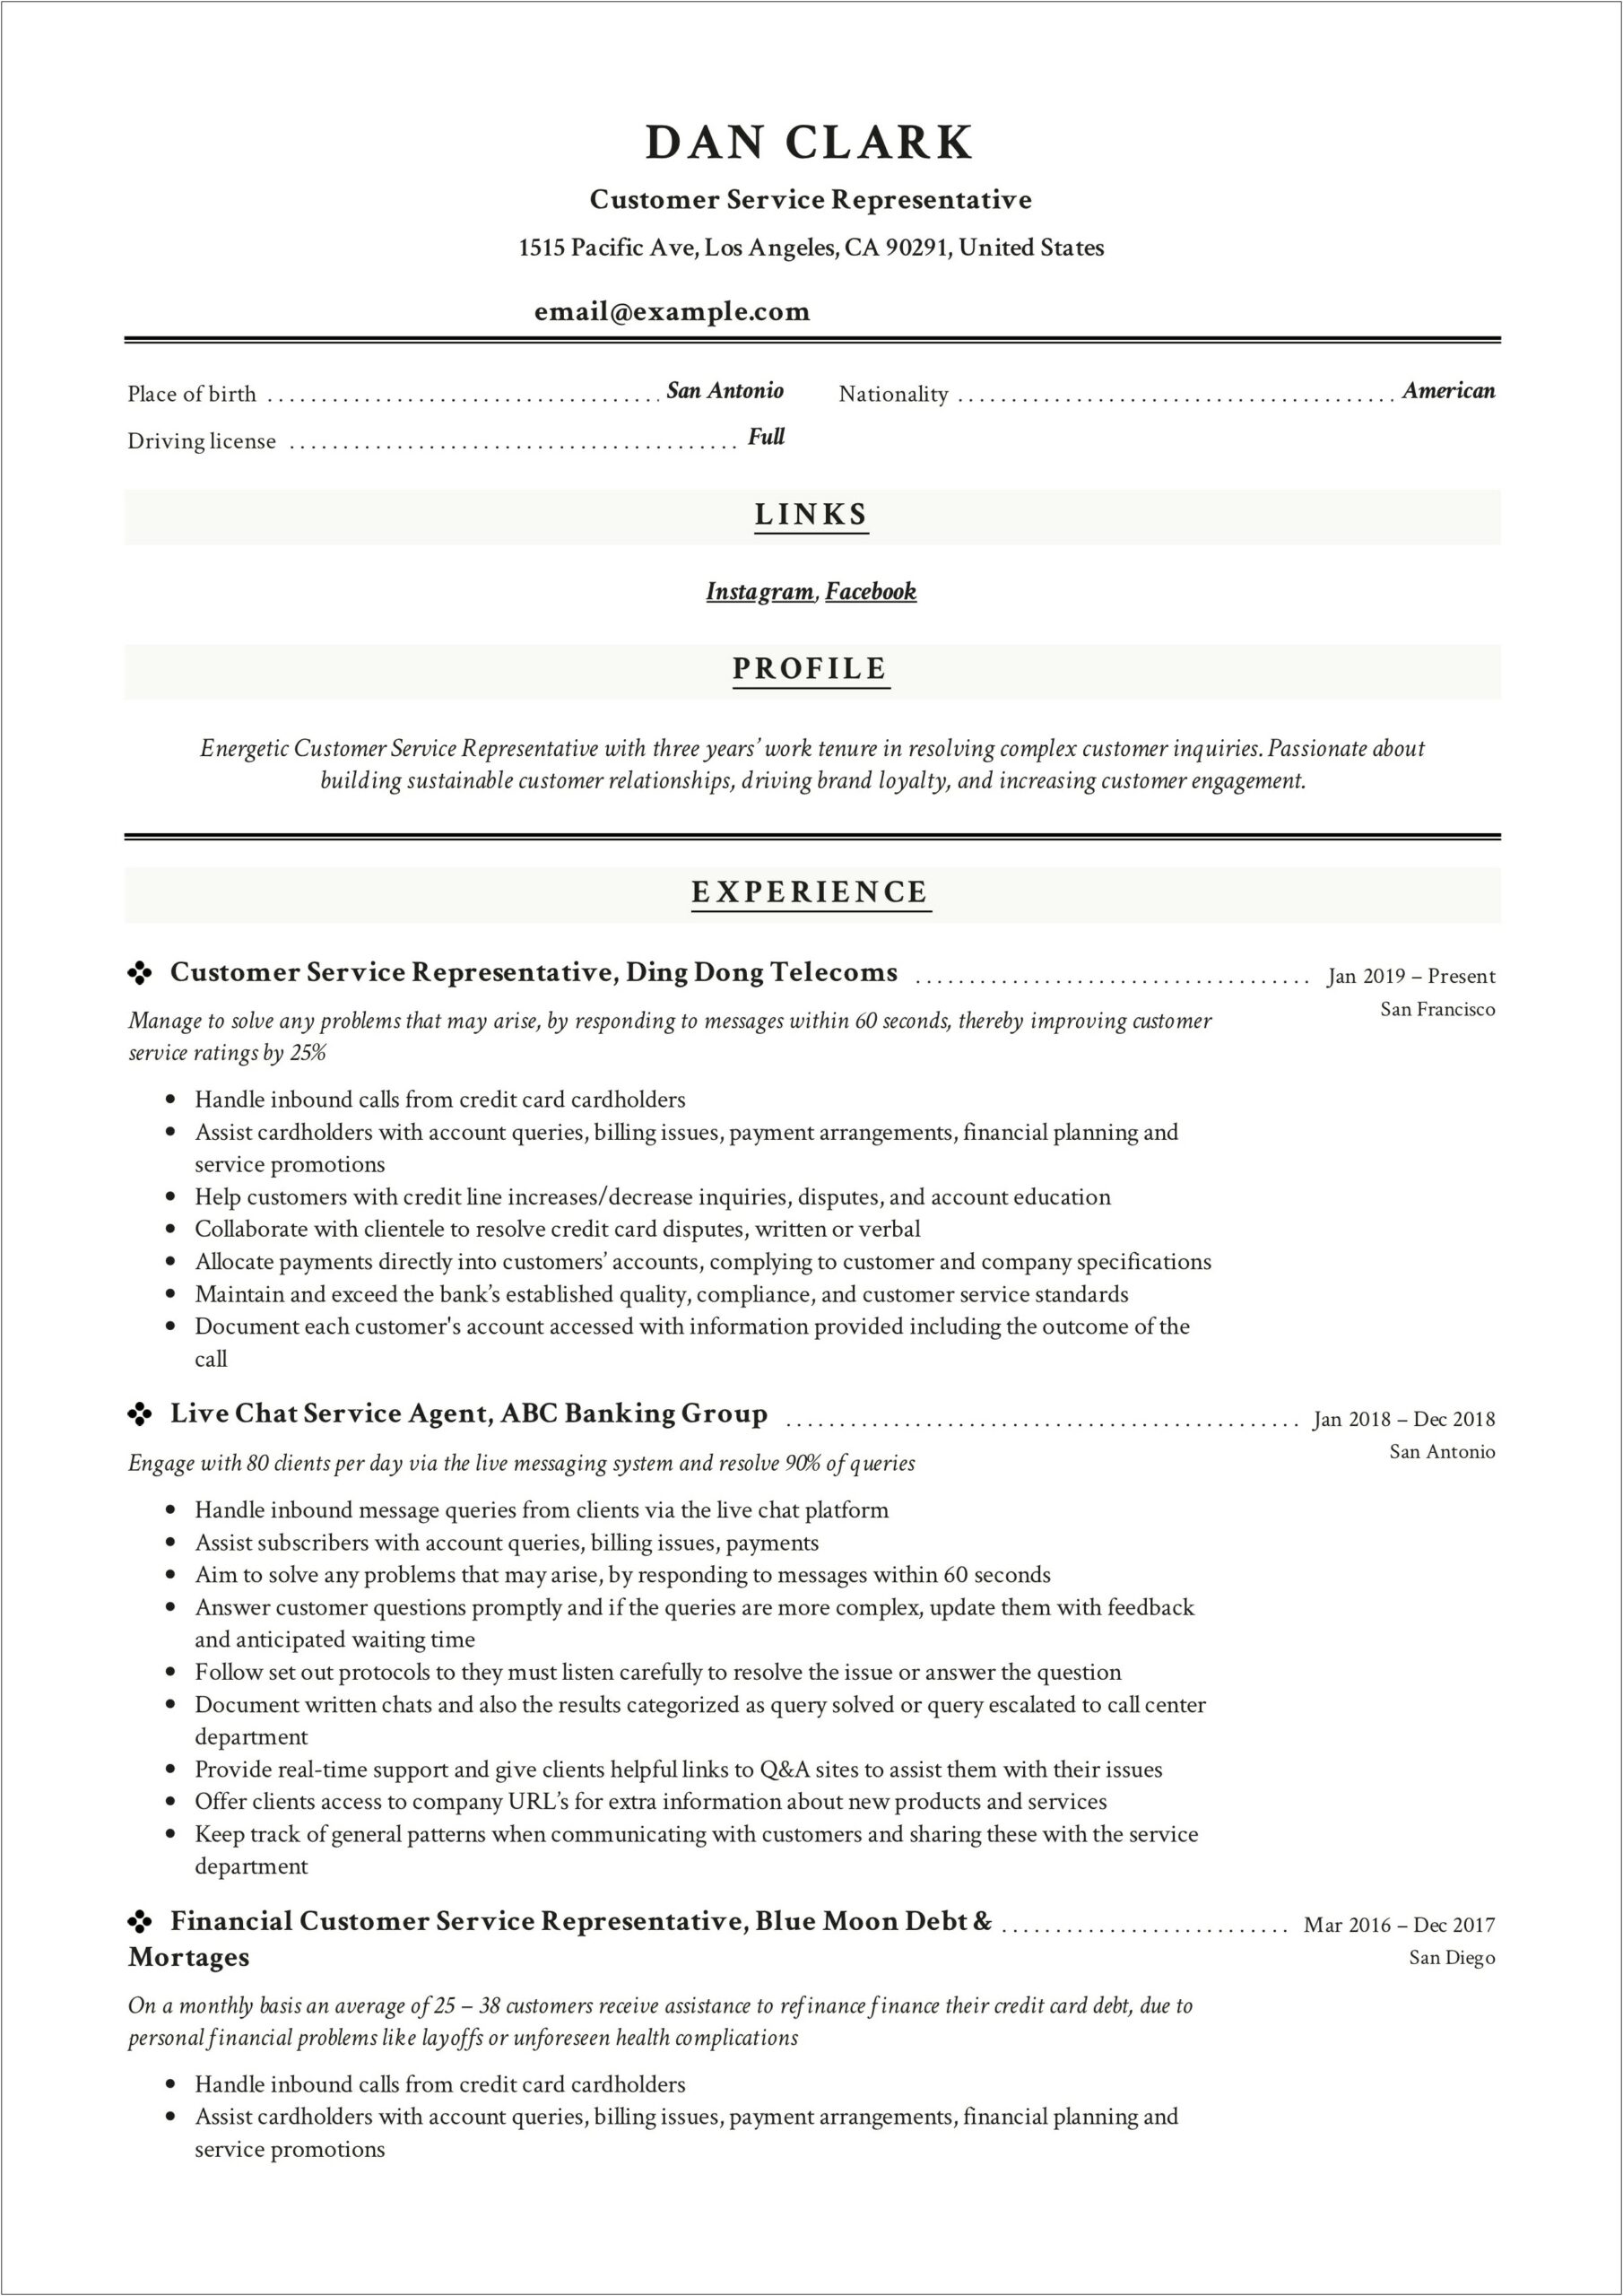 25 Year In Finance Sample Resume